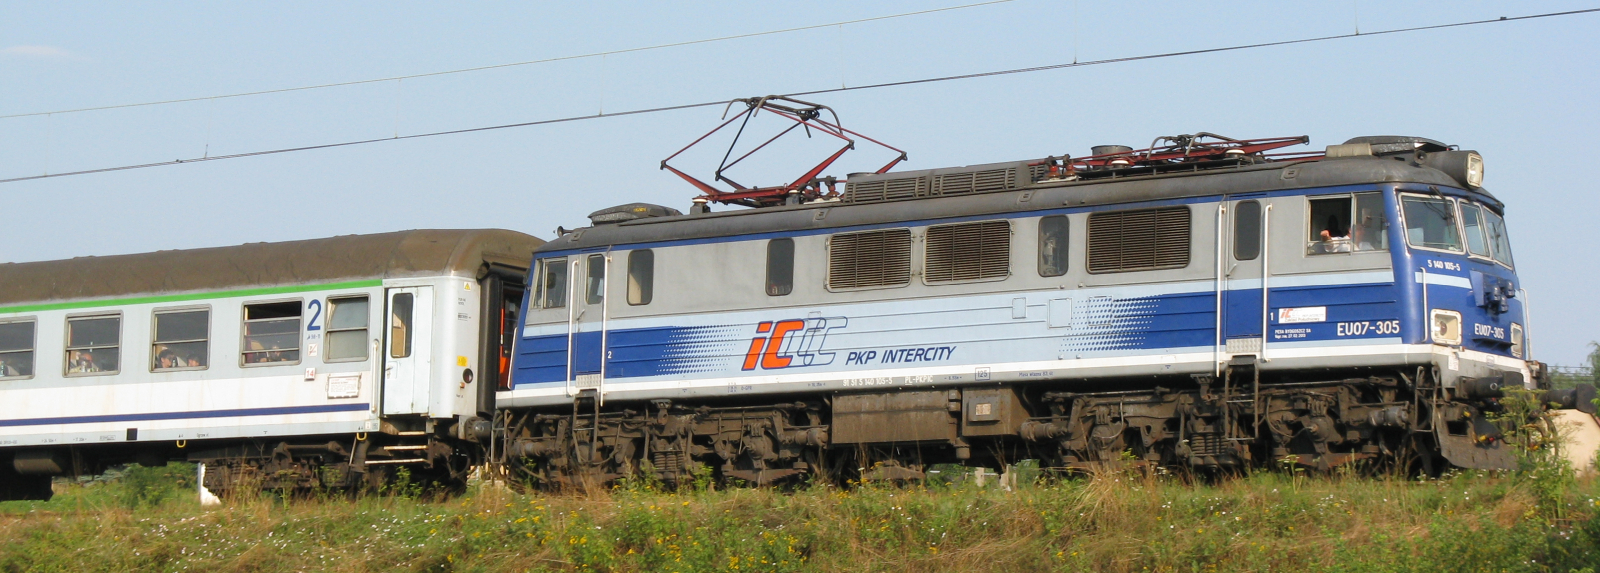 PKP Intercity EU07 305 in August 2015 near Chabówka